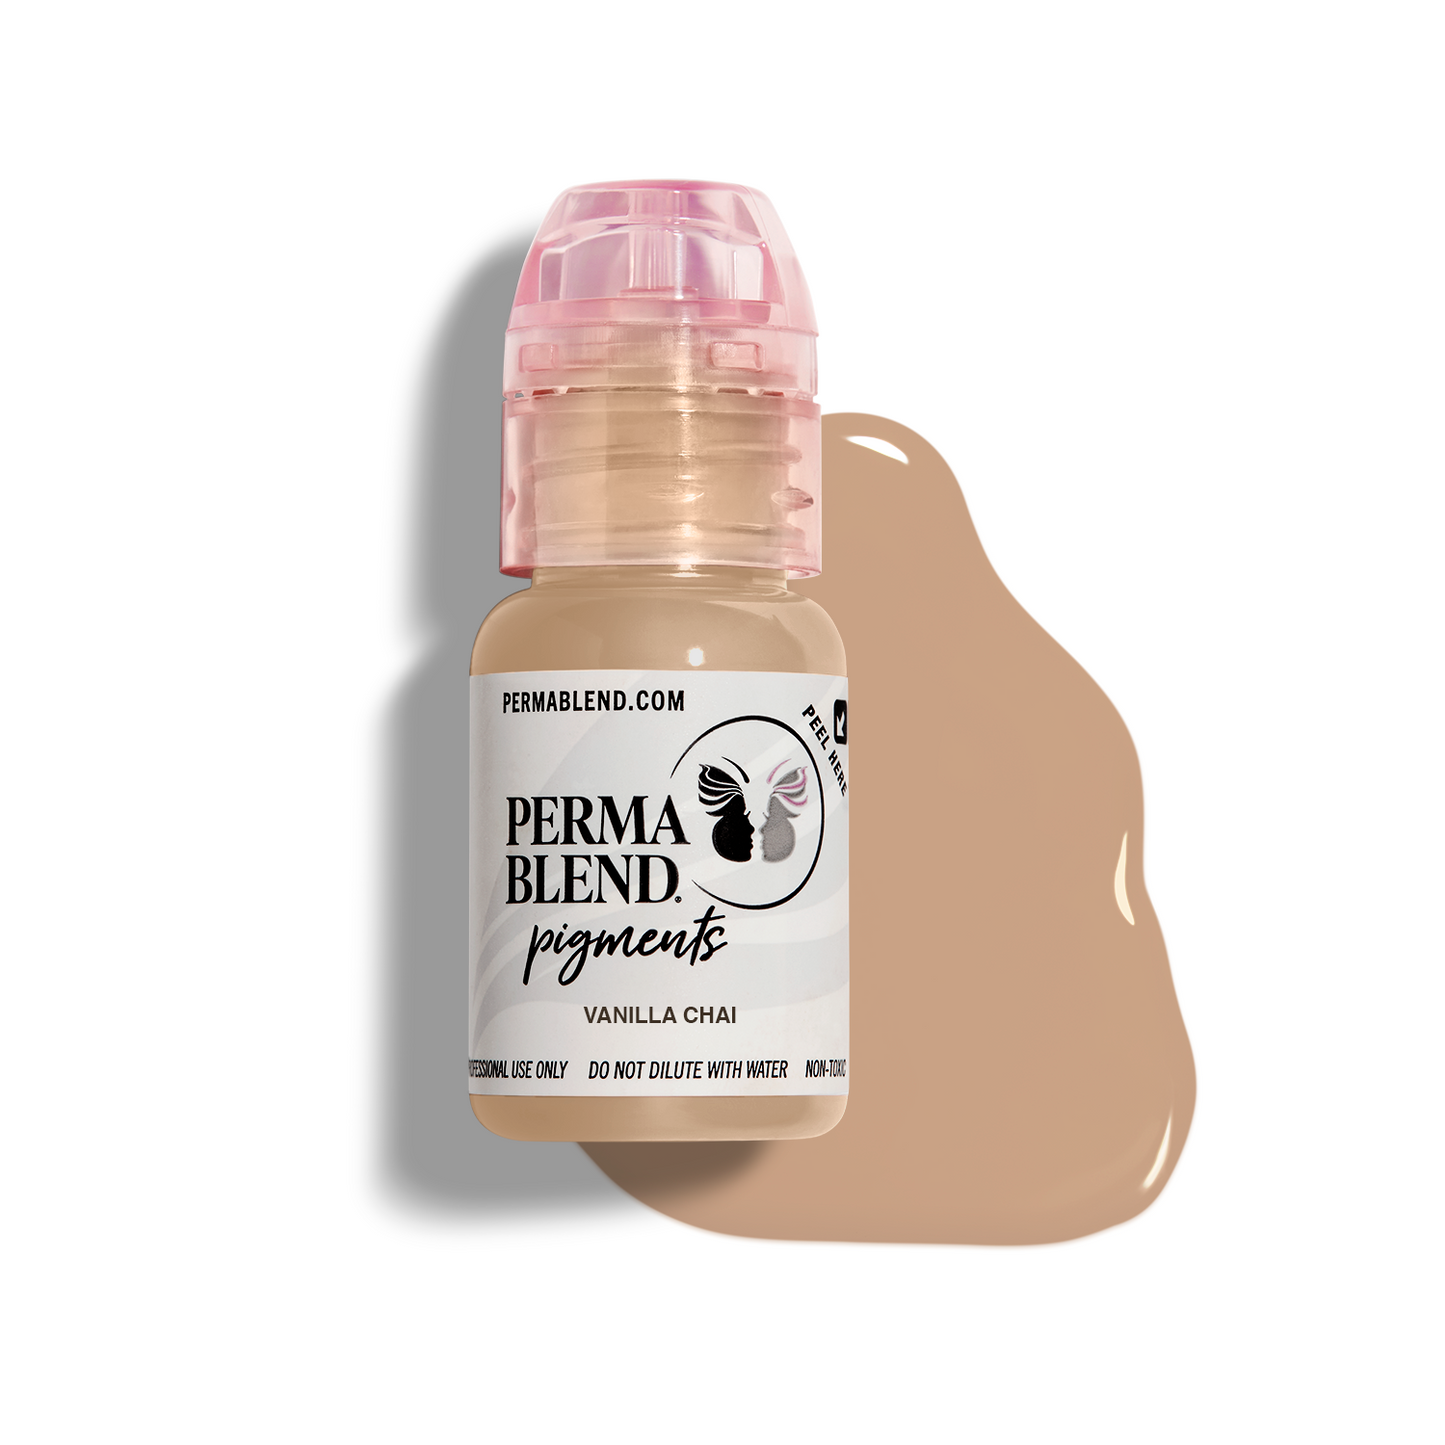 Perma Blend Pigments - Vanilla Chai